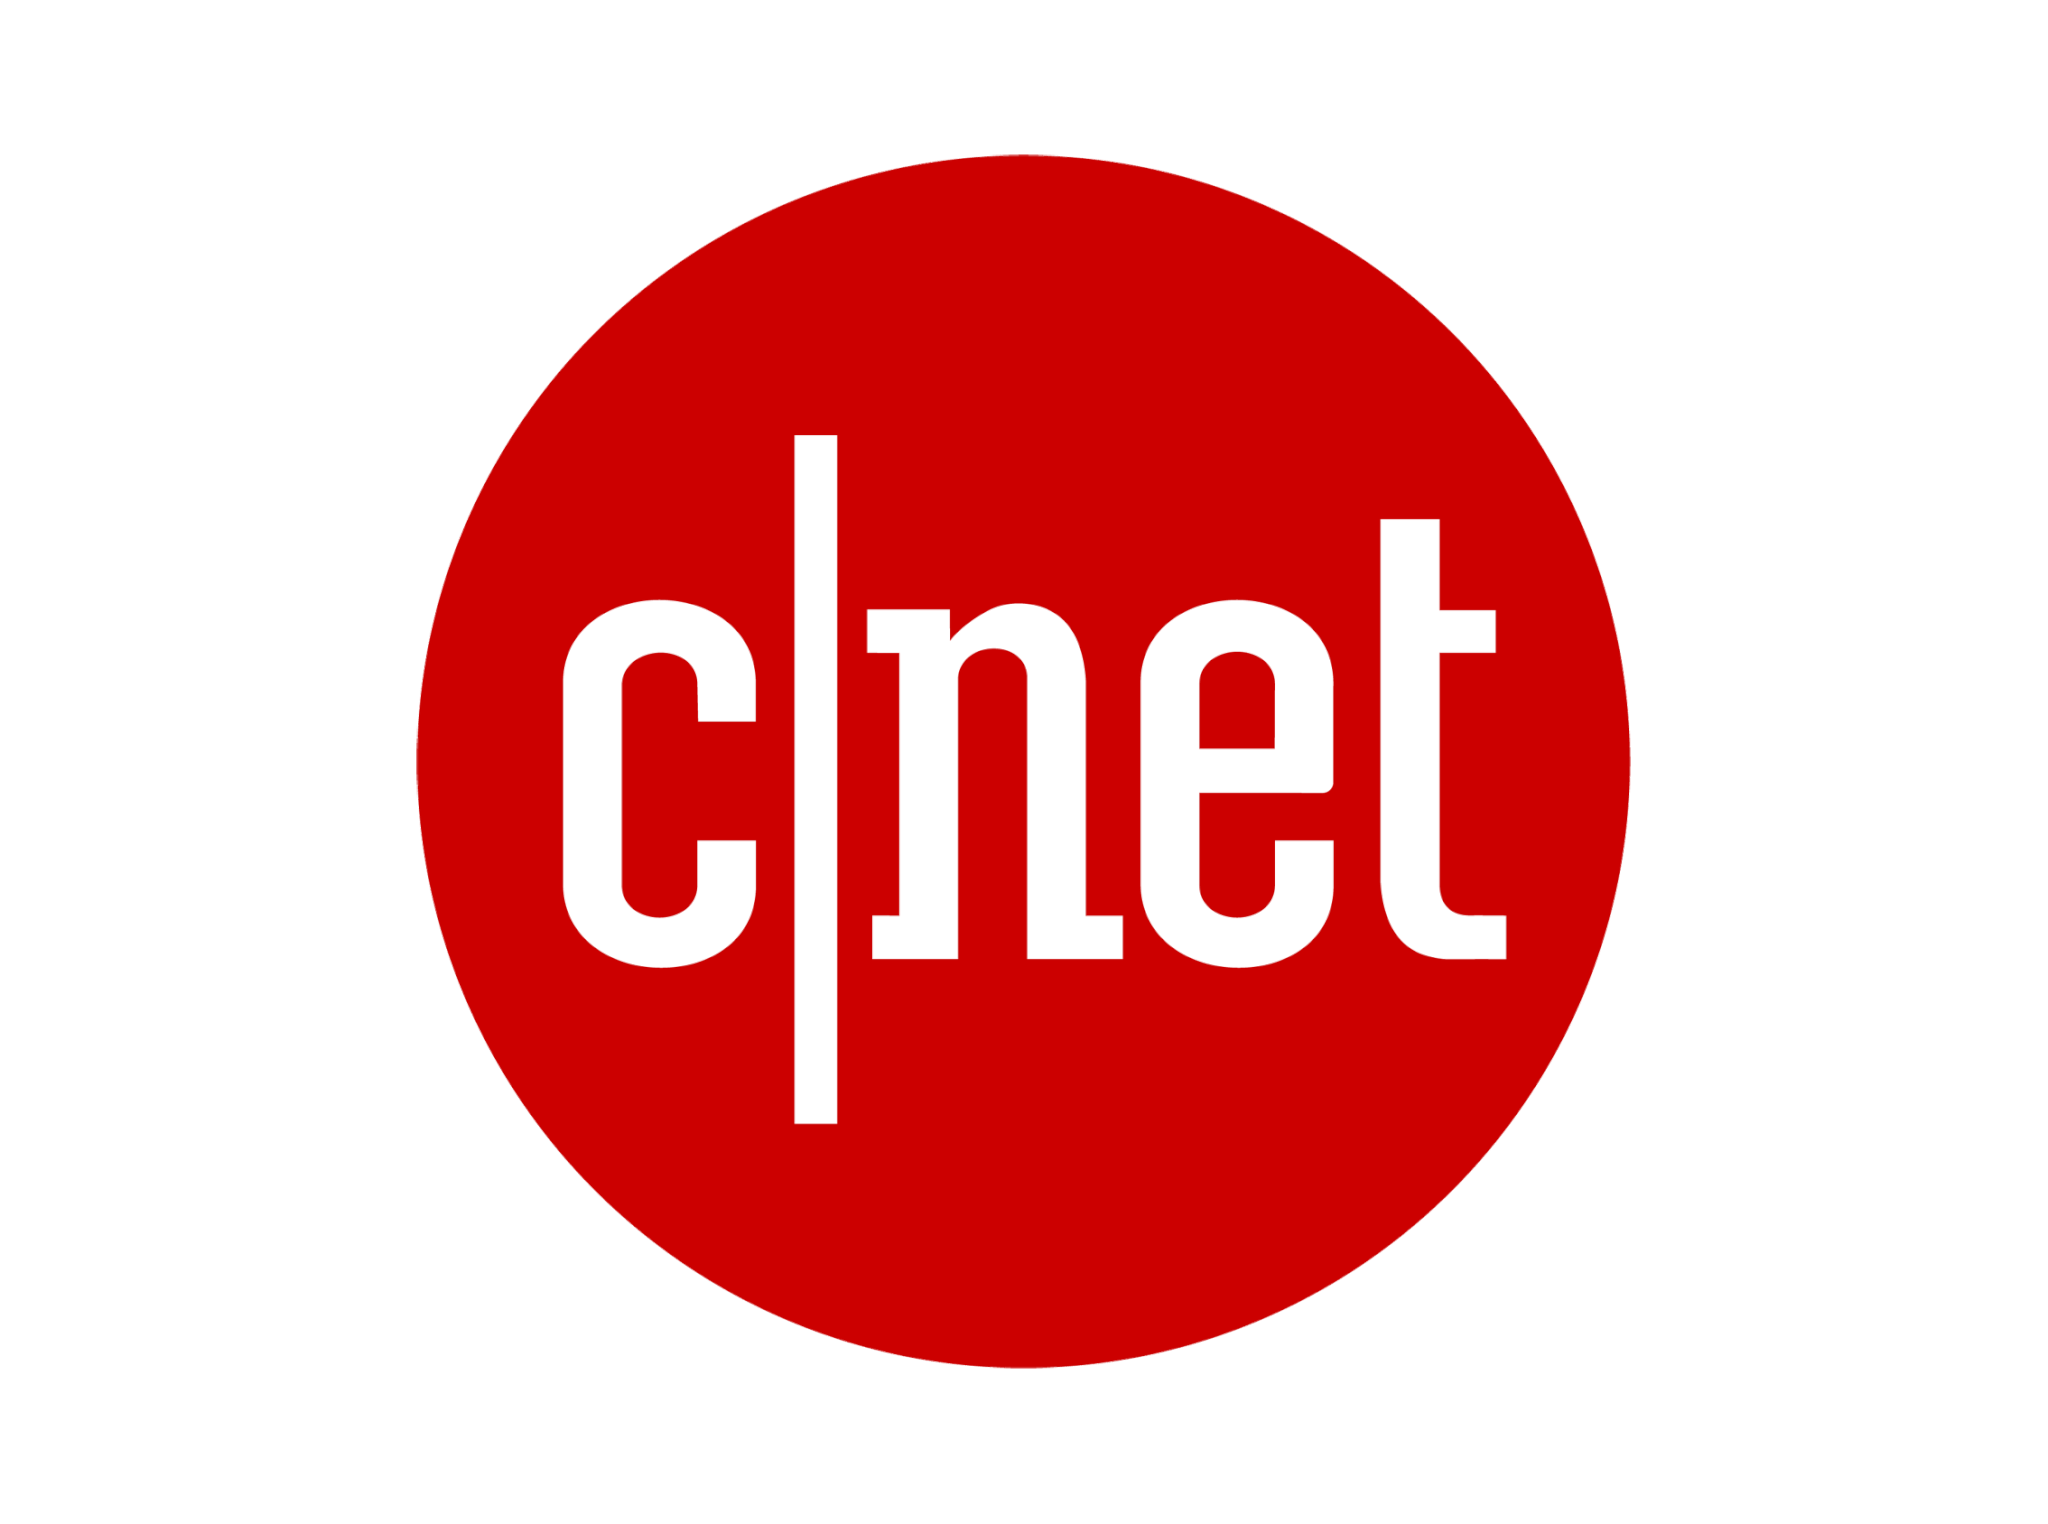 cnet-logo